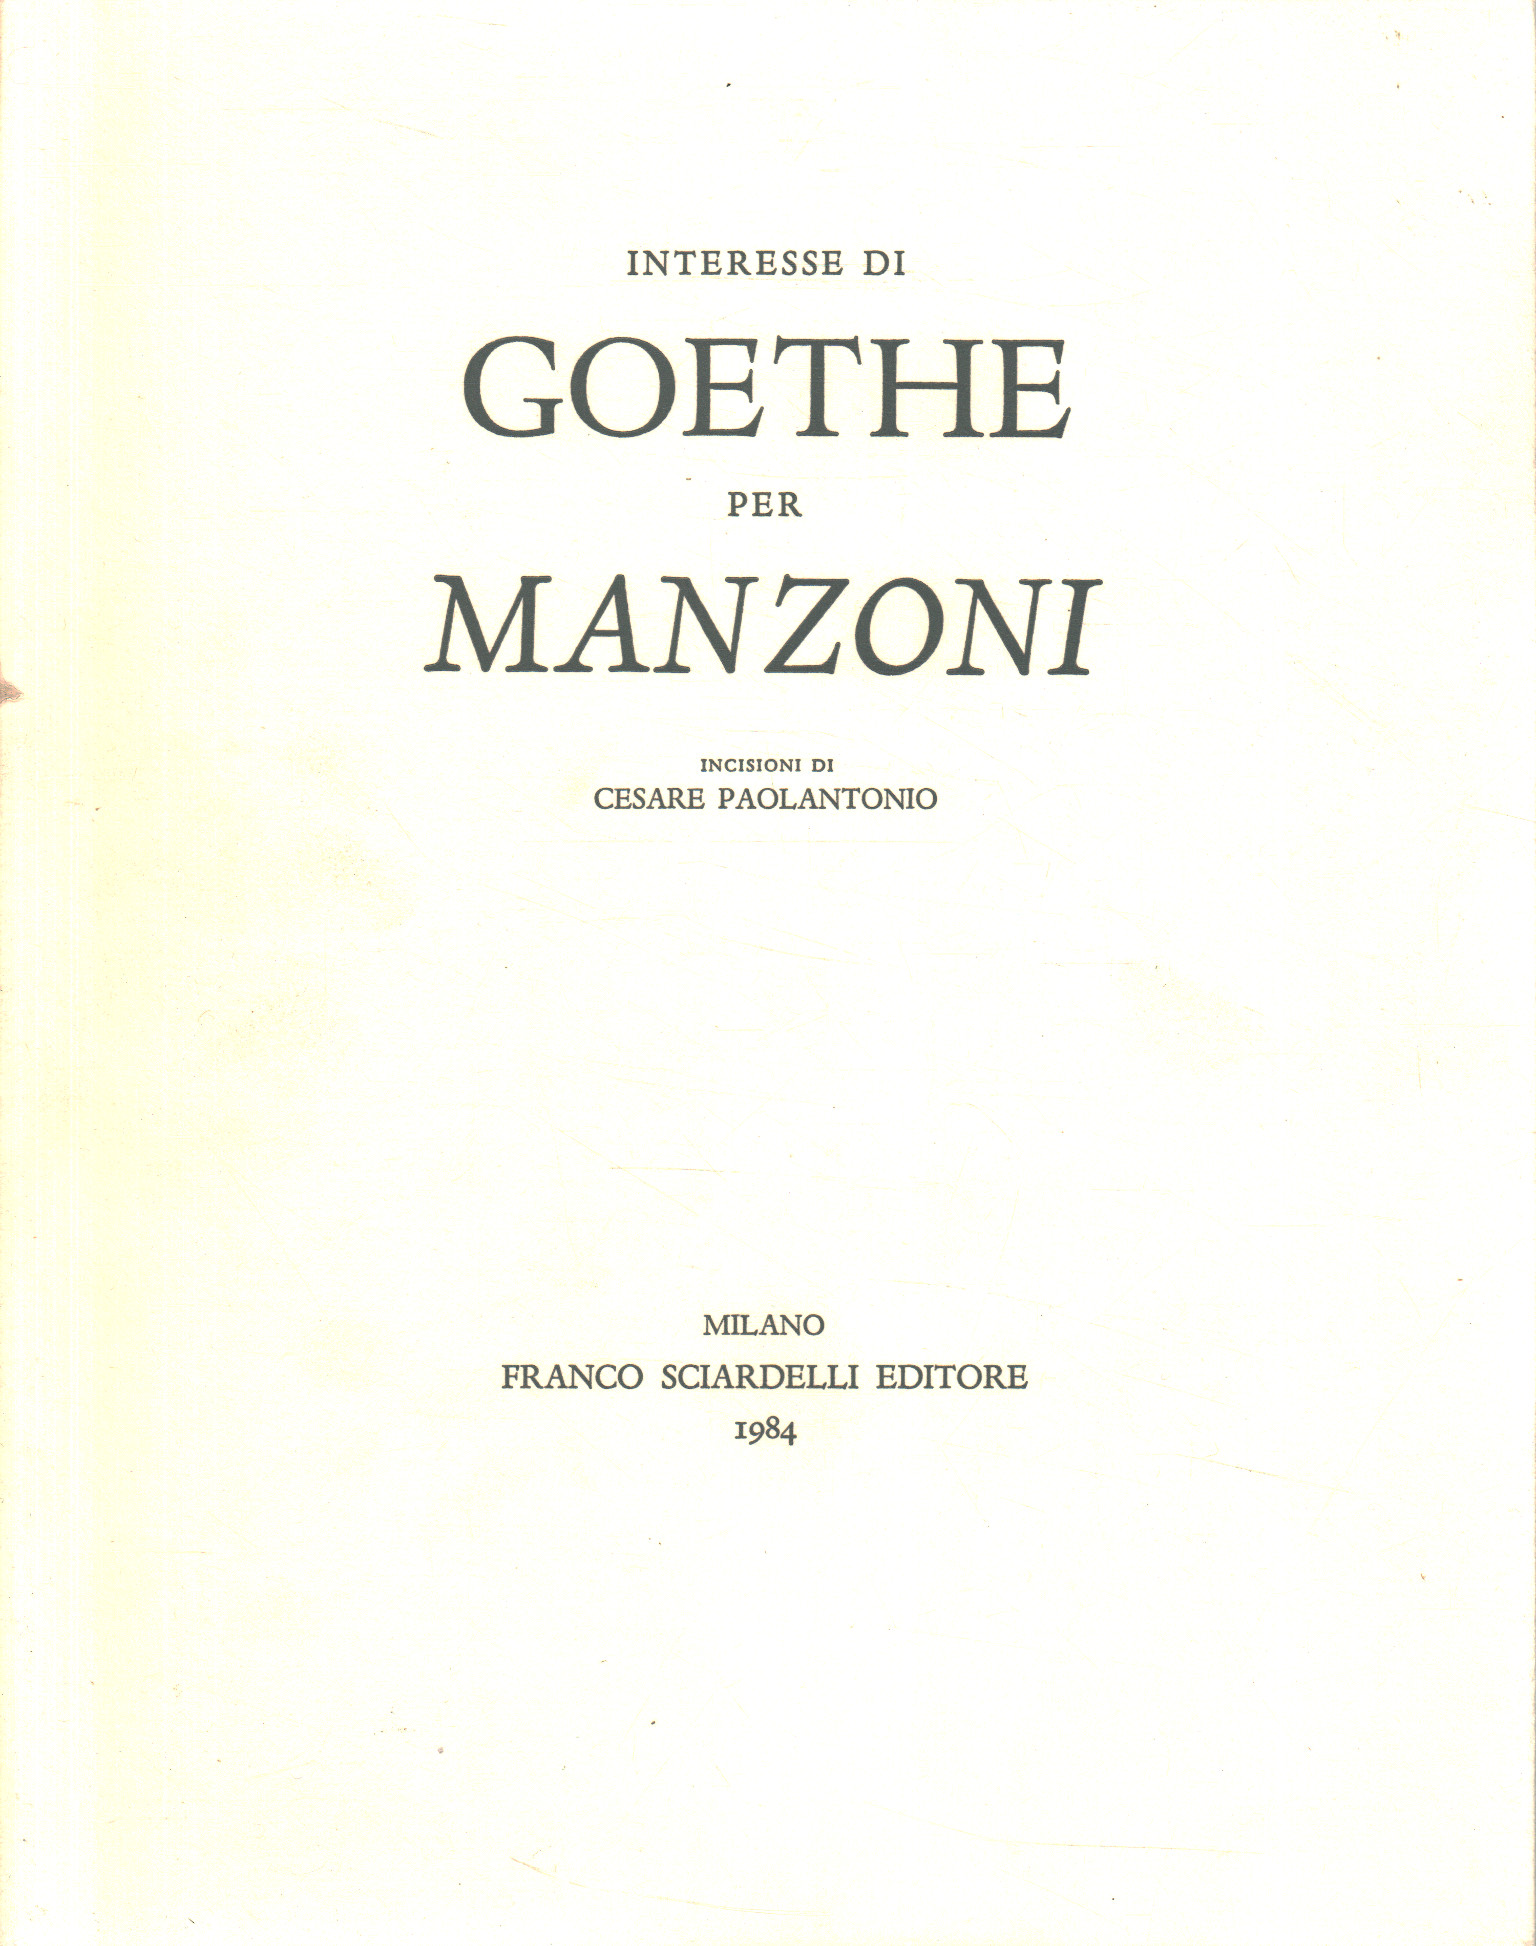 Goethe's interest in Manzoni